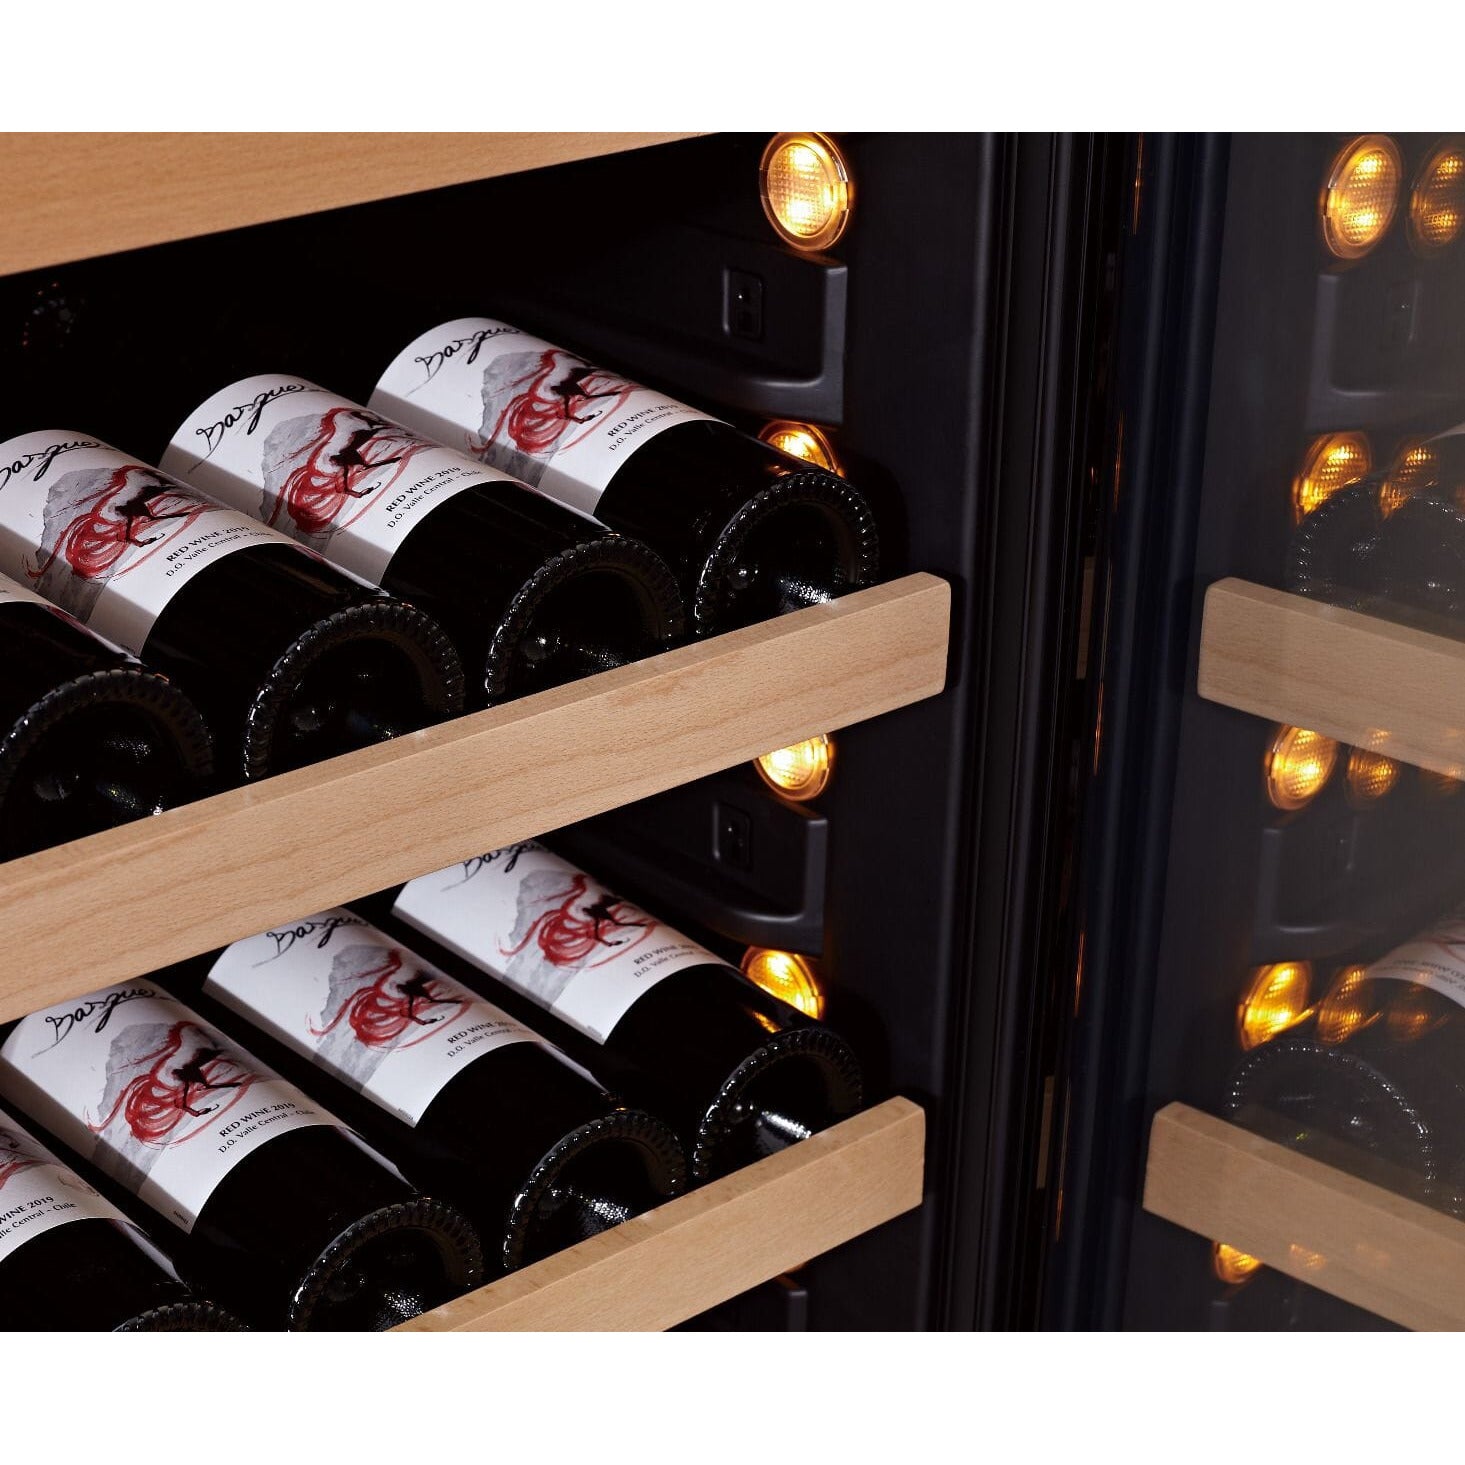 SWISSCAVE Premium - 600mm - 163 Bottle - Freestanding / Built in Wine Cooler - WLB460FL-MIX - Sapele Shelving